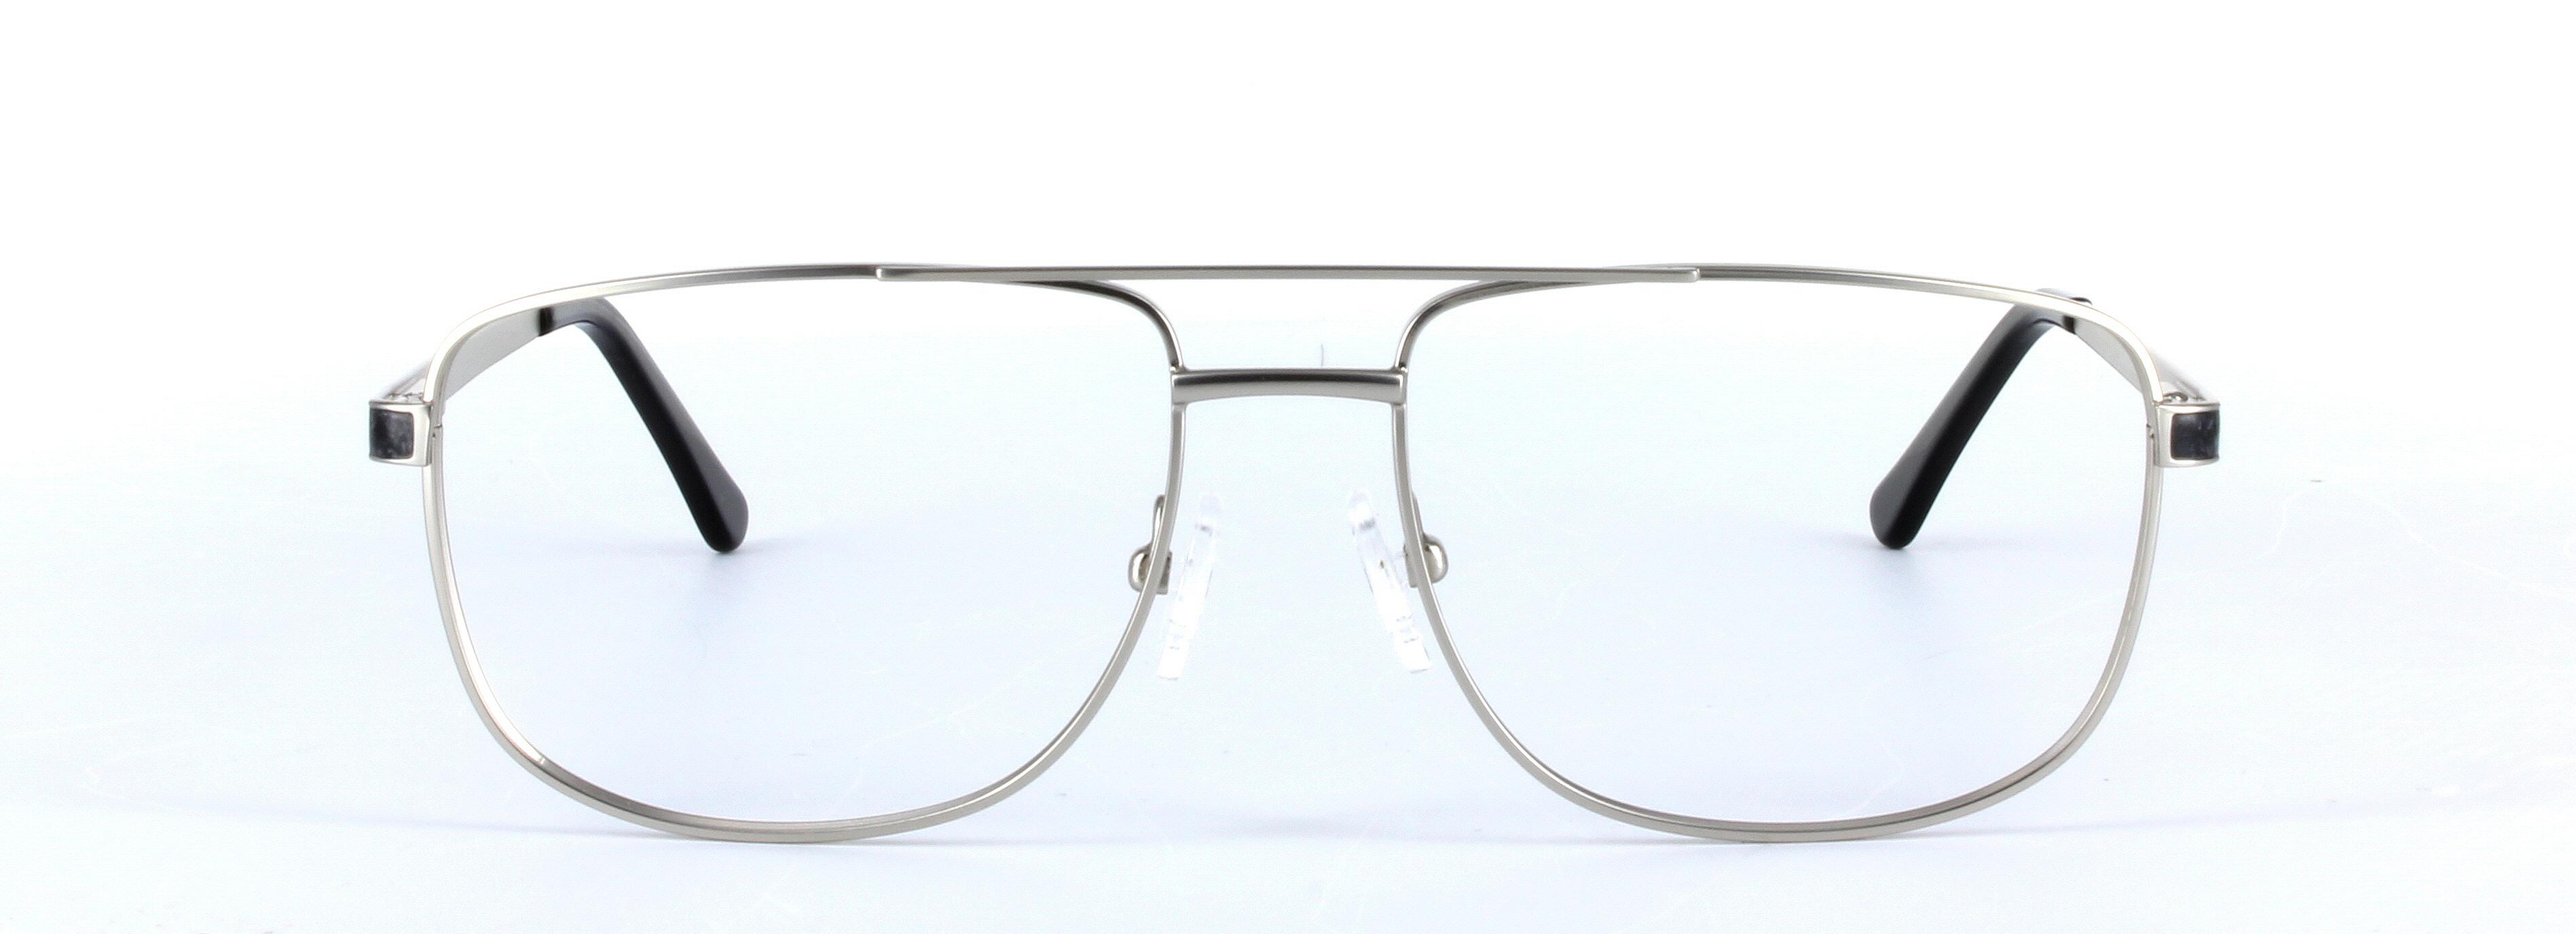 Marlowe Silver Full Rim Oval Metal Glasses - Image View 5